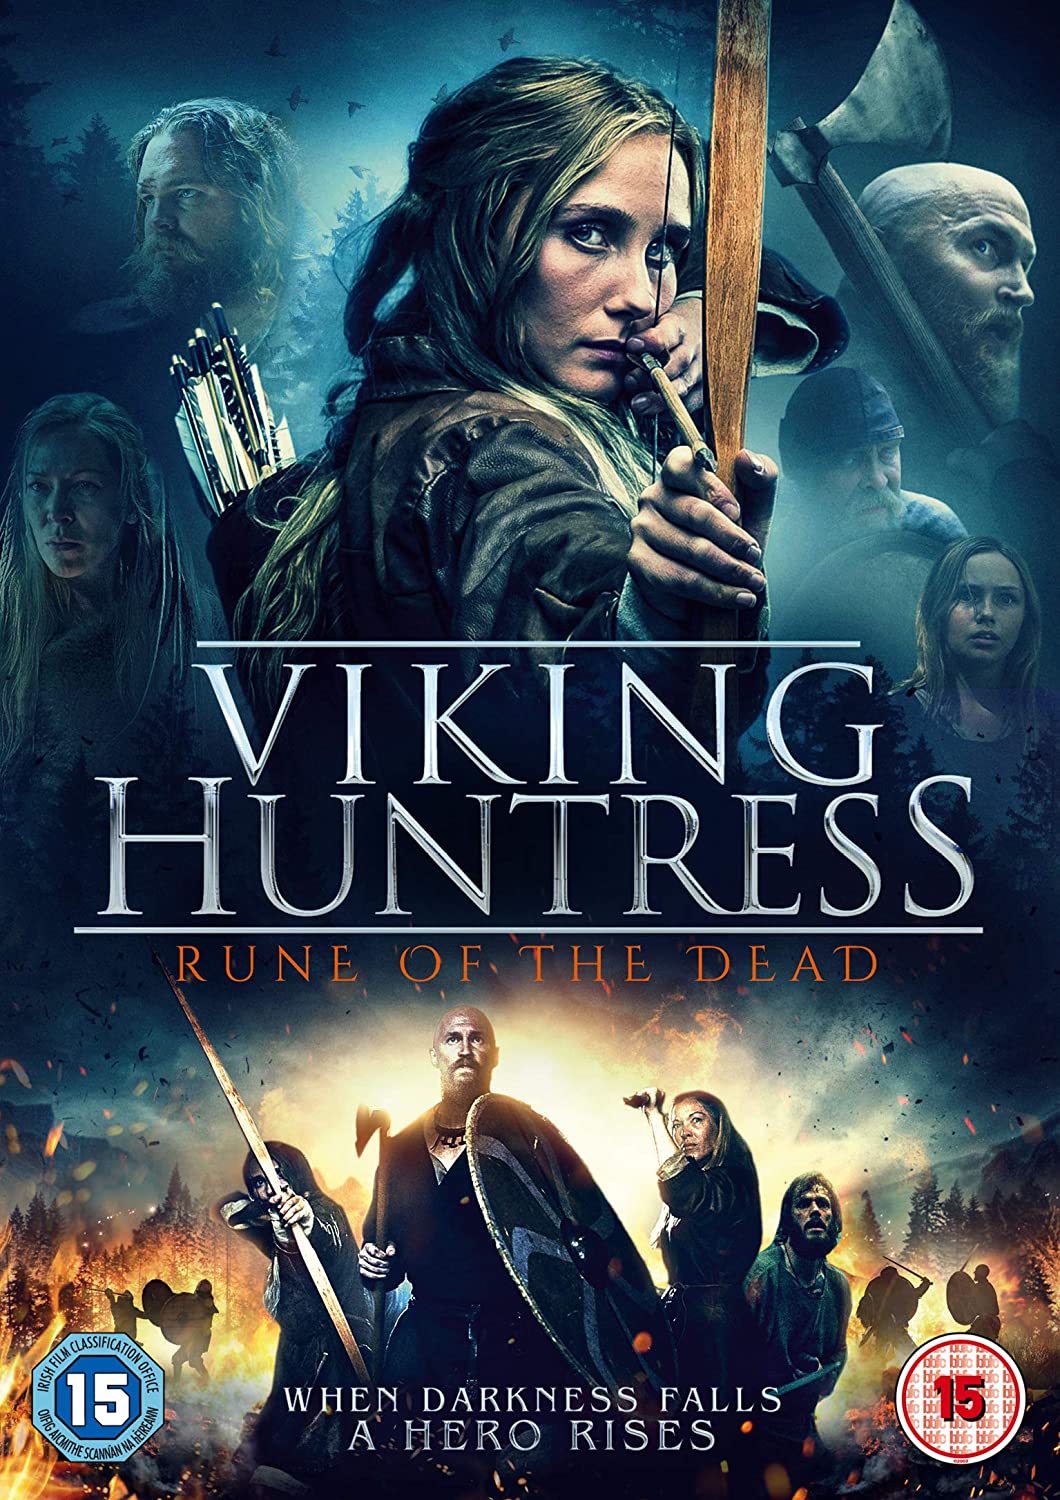 Viking Huntress: Rune of the Dead - Action/Thriller [DVD]